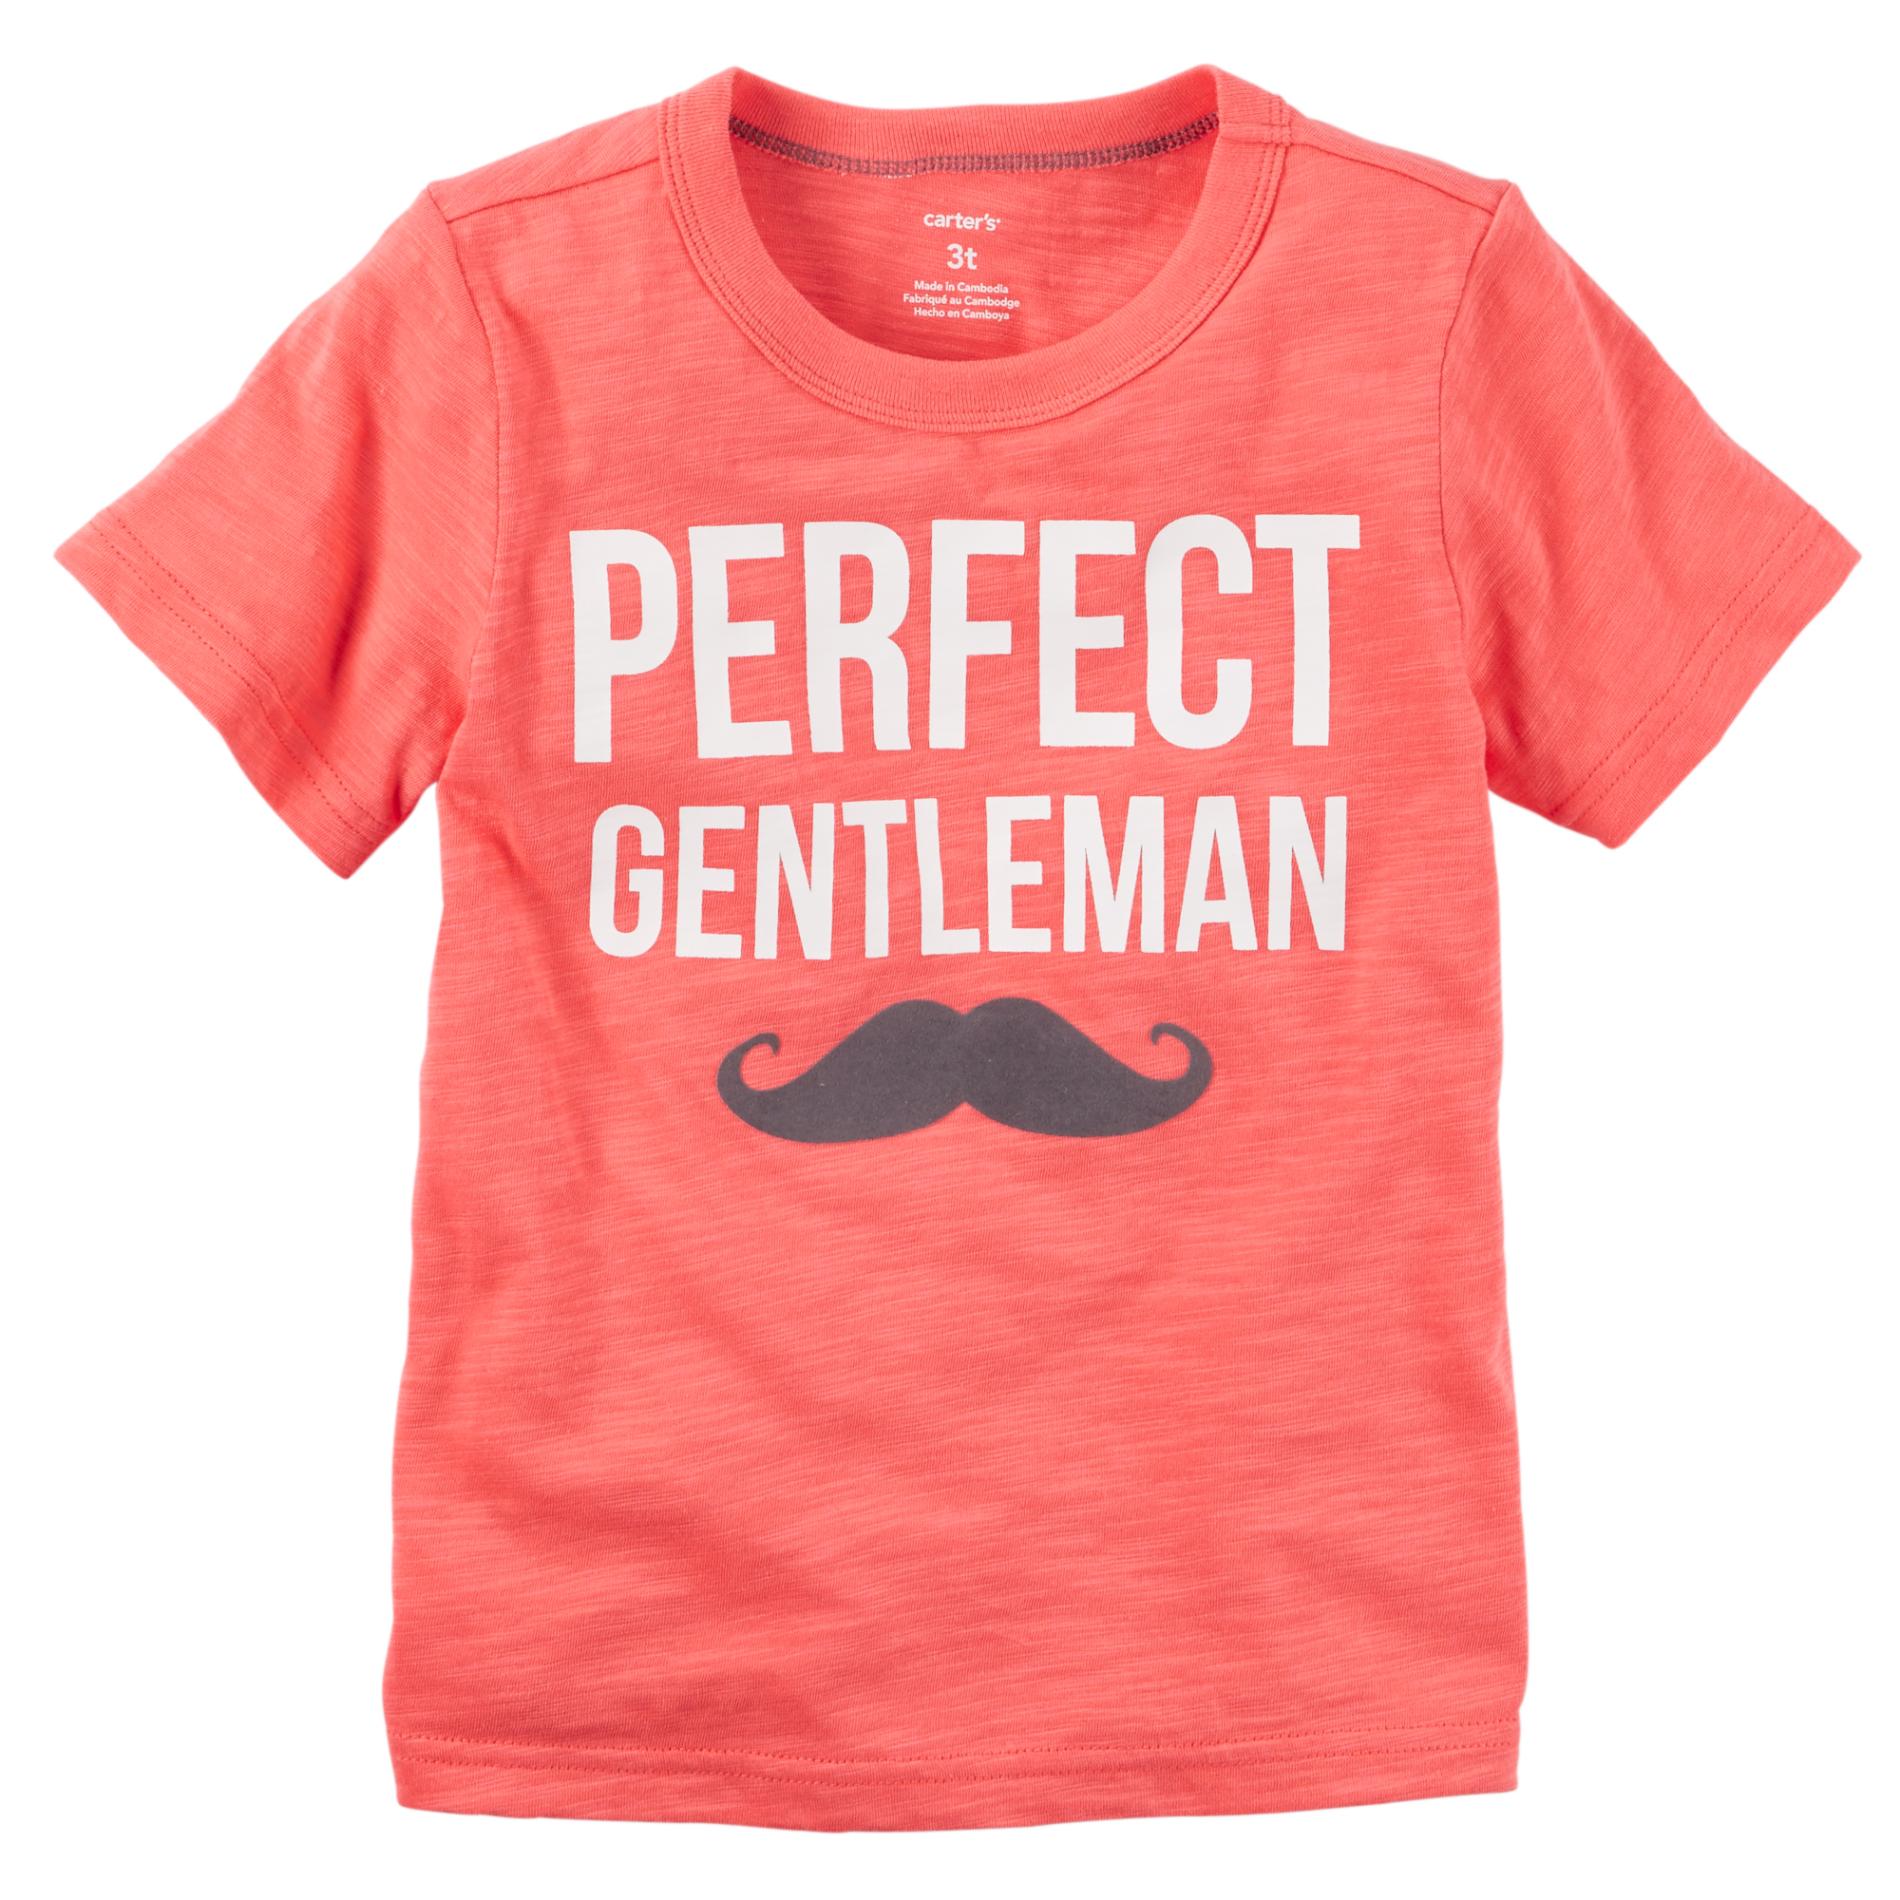 Carter's Toddler Boy's Graphic T-Shirt - Perfect Gentleman